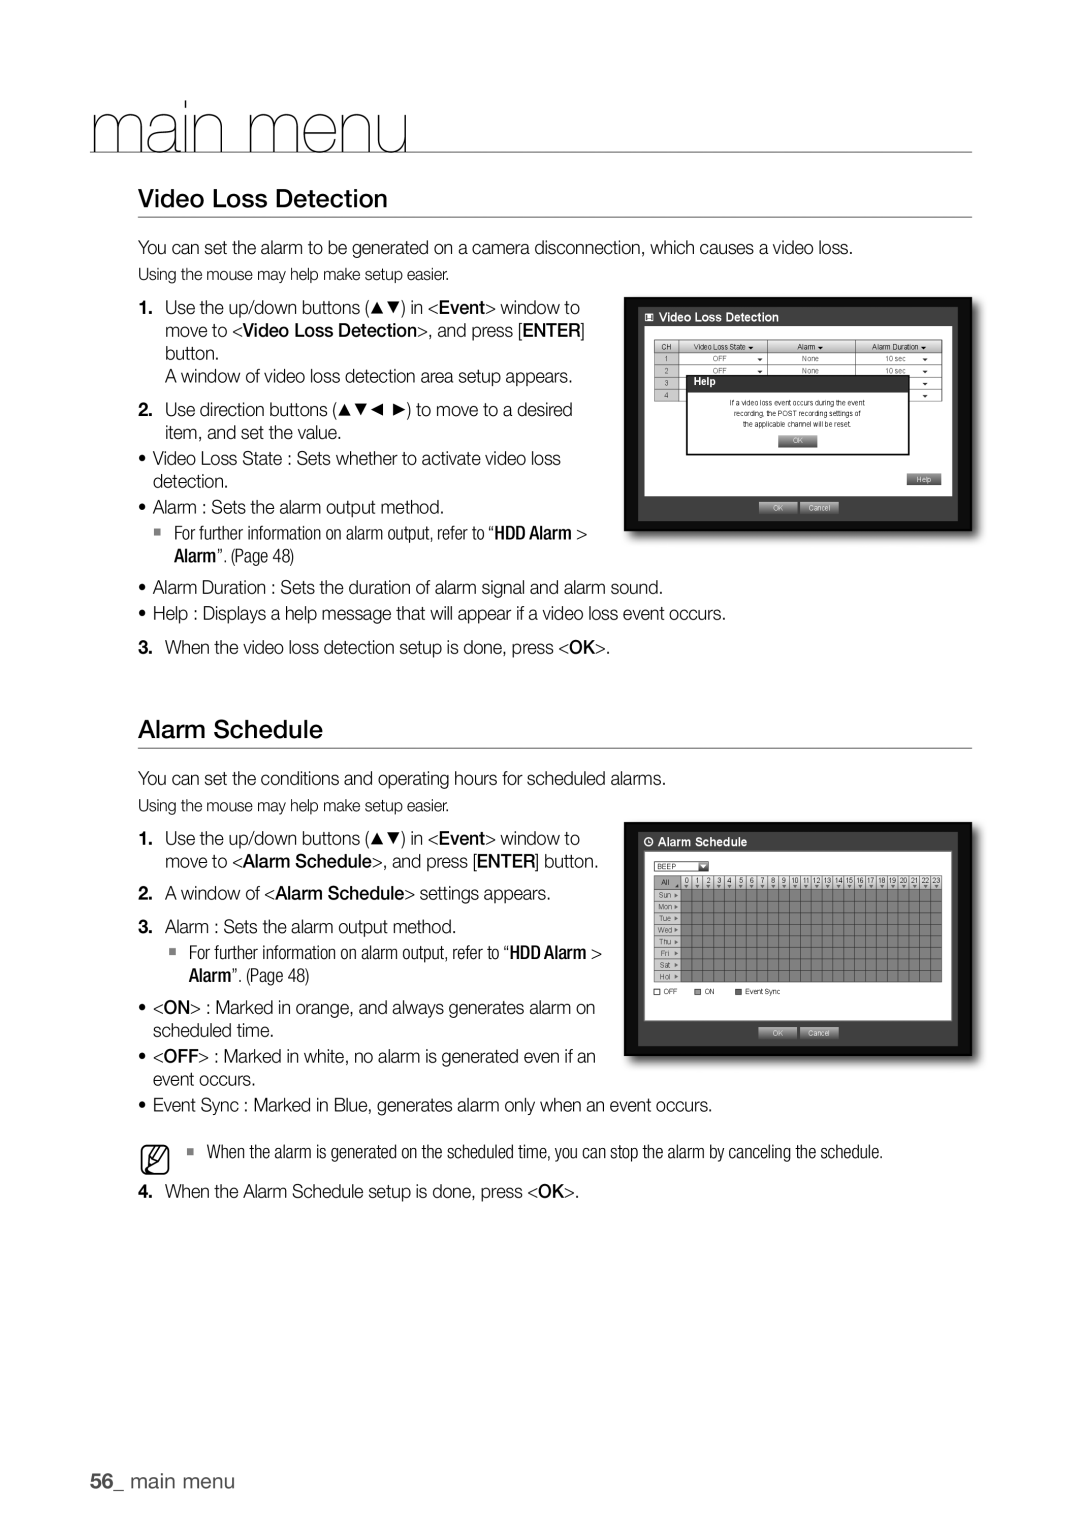 Samsung SDR3100 user manual Video Loss Detection, alarm Schedule, 56_ main menu 